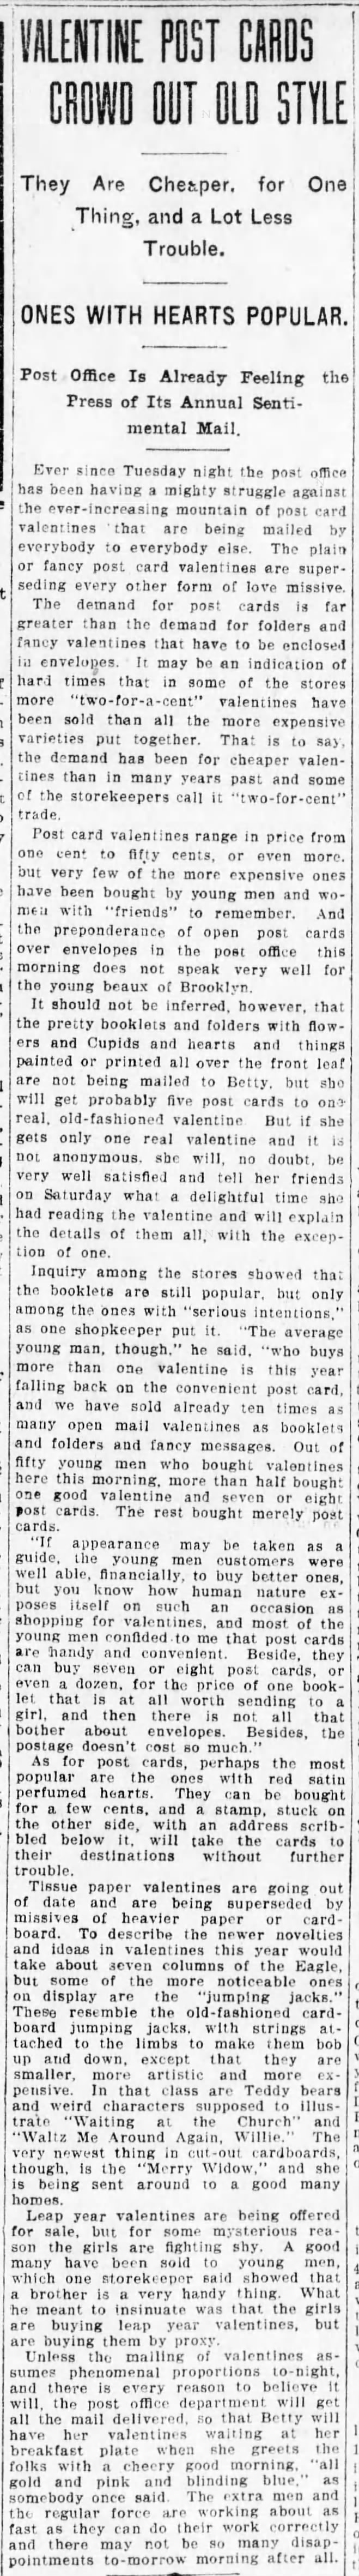 Postcard Valentines popular in 1908